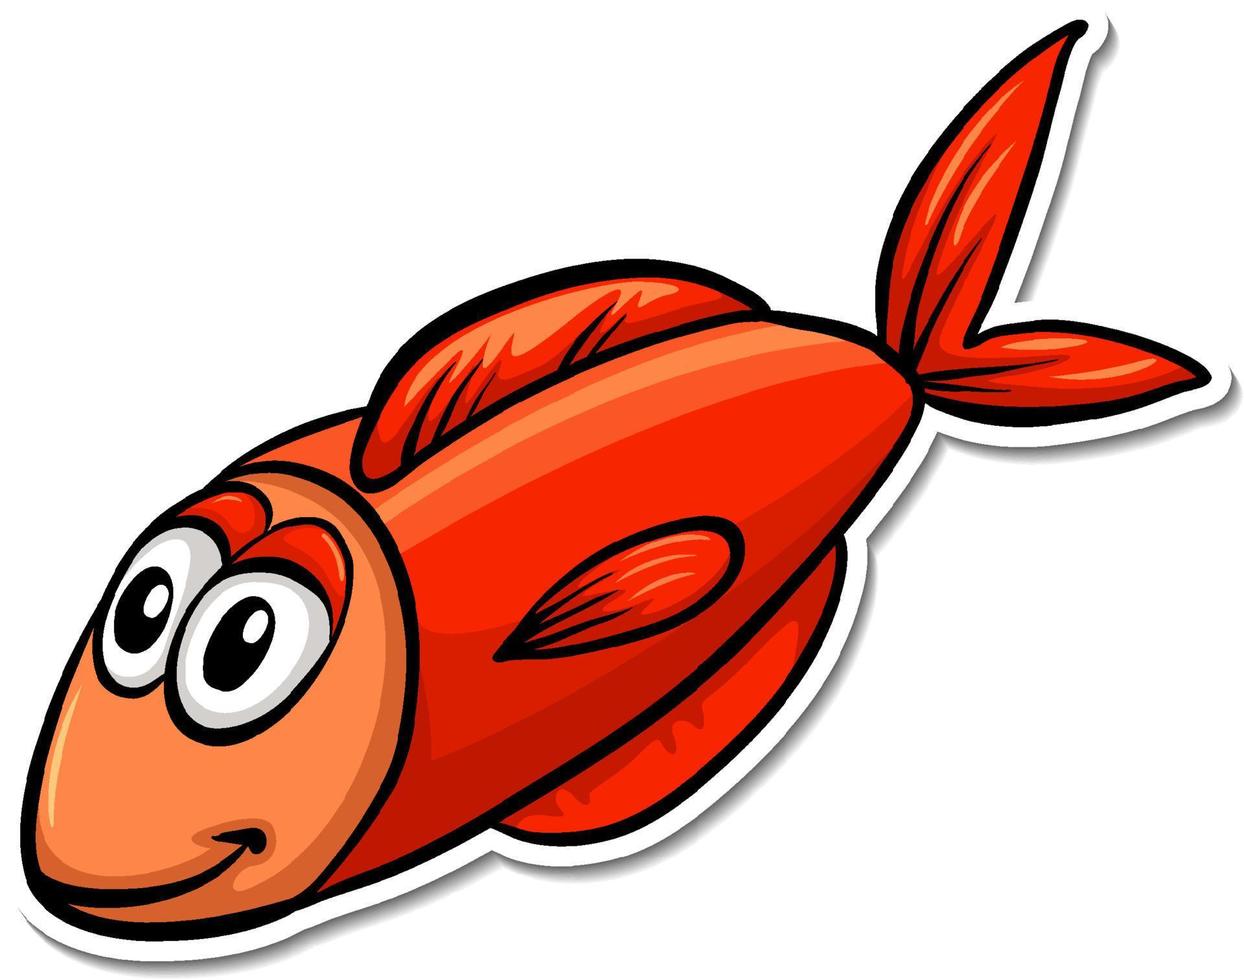 etiqueta engomada de la historieta del animal marino del pez rojo vector